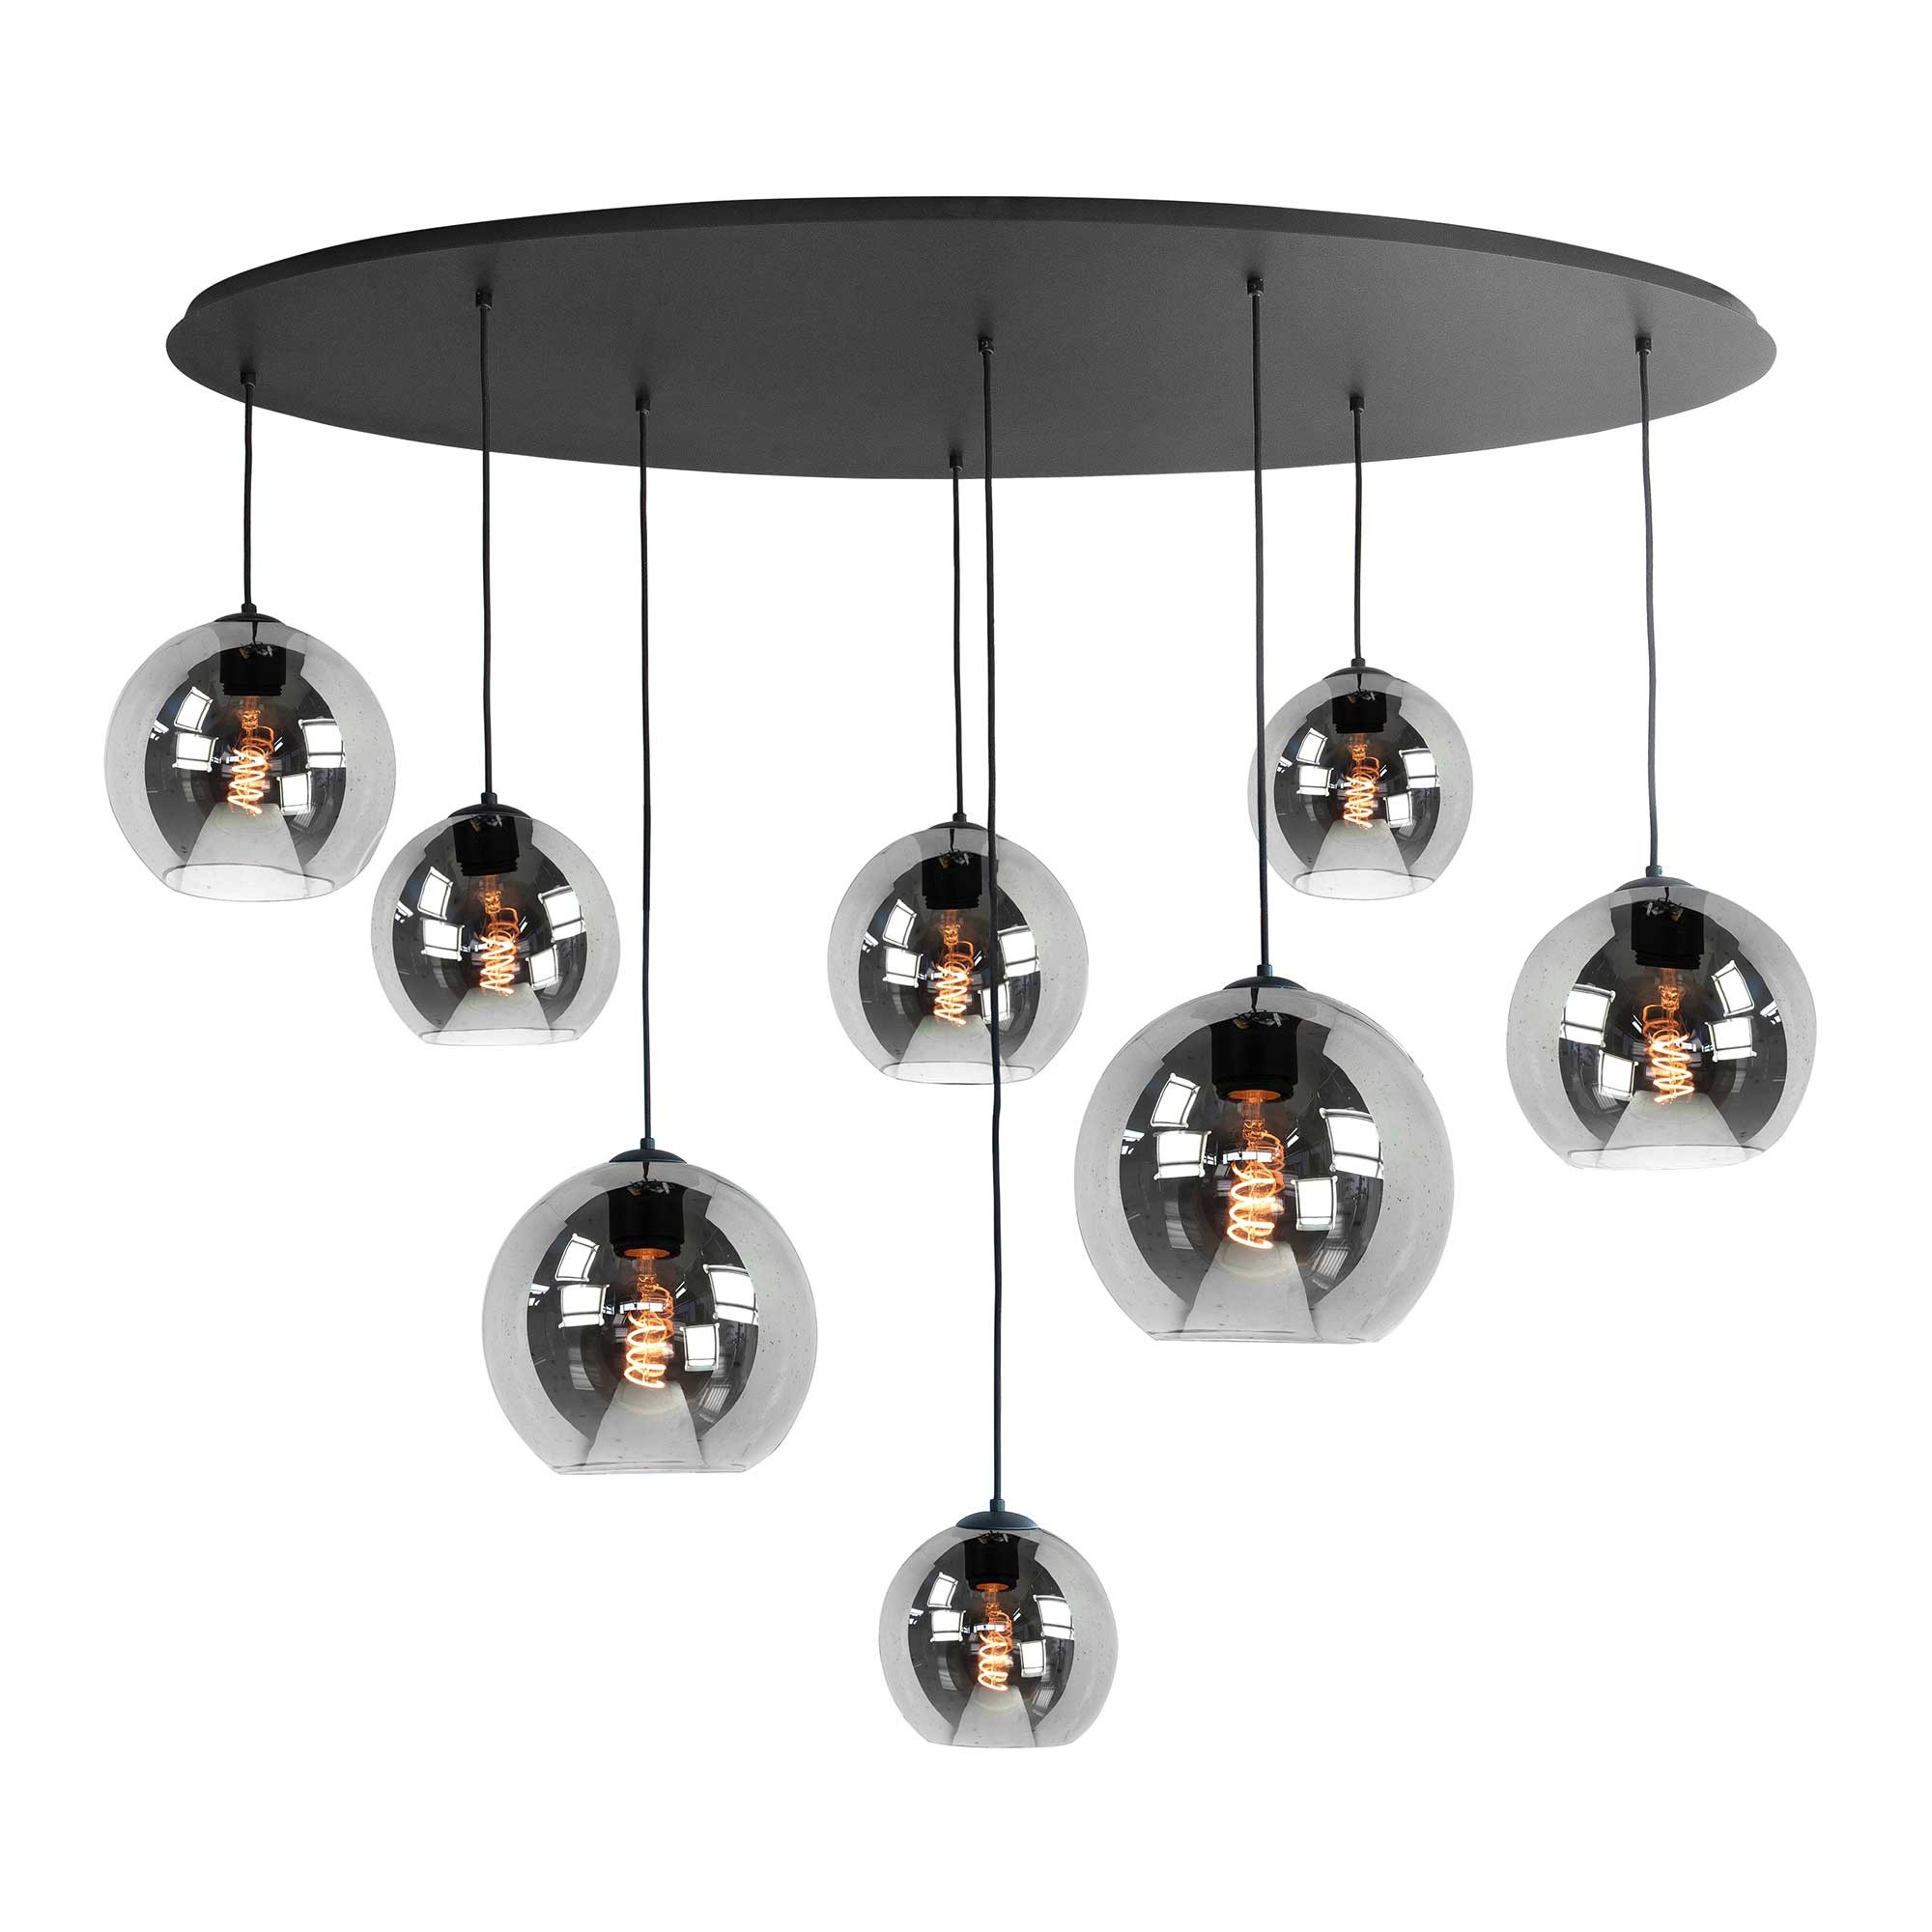 Highlight Hanglamp Fantasy ovaal 8 lichts rook glas L 140 cm zwart